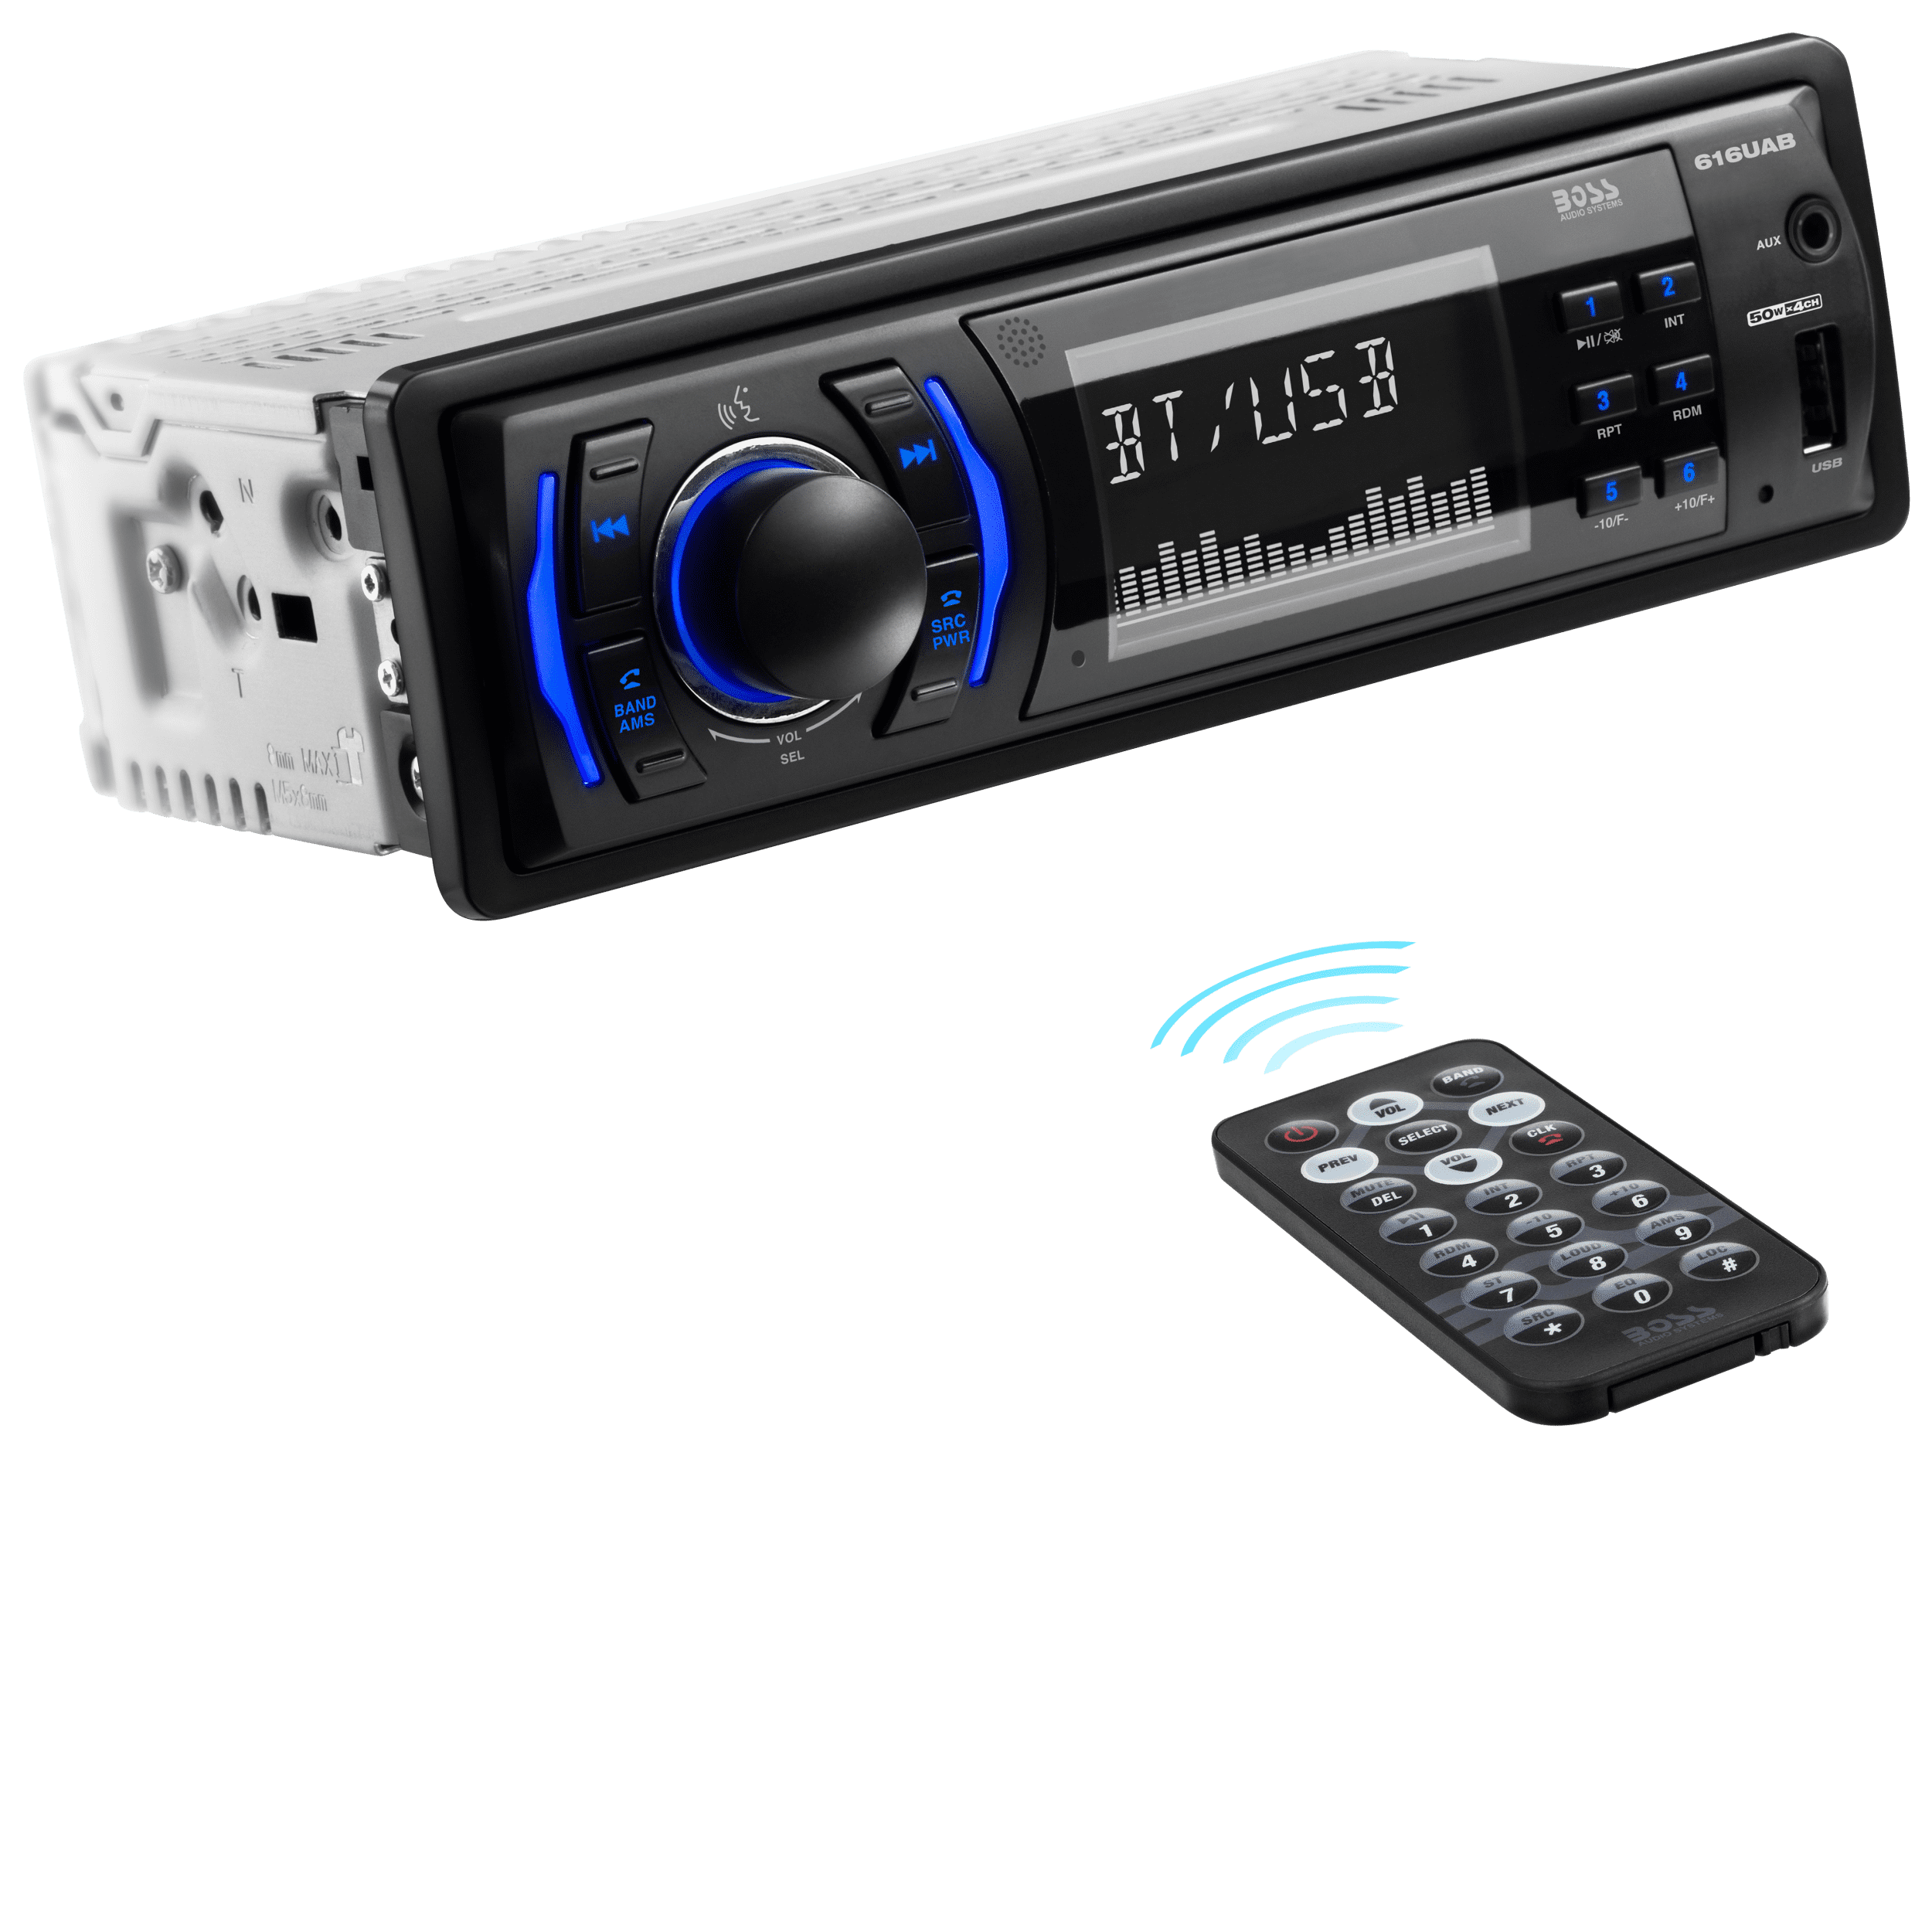 Hiel Commissie Poging BOSS Audio Systems 616UAB Car Stereo, Bluetooth, MP3, USB, Aux In, AM/FM  Radio - Walmart.com